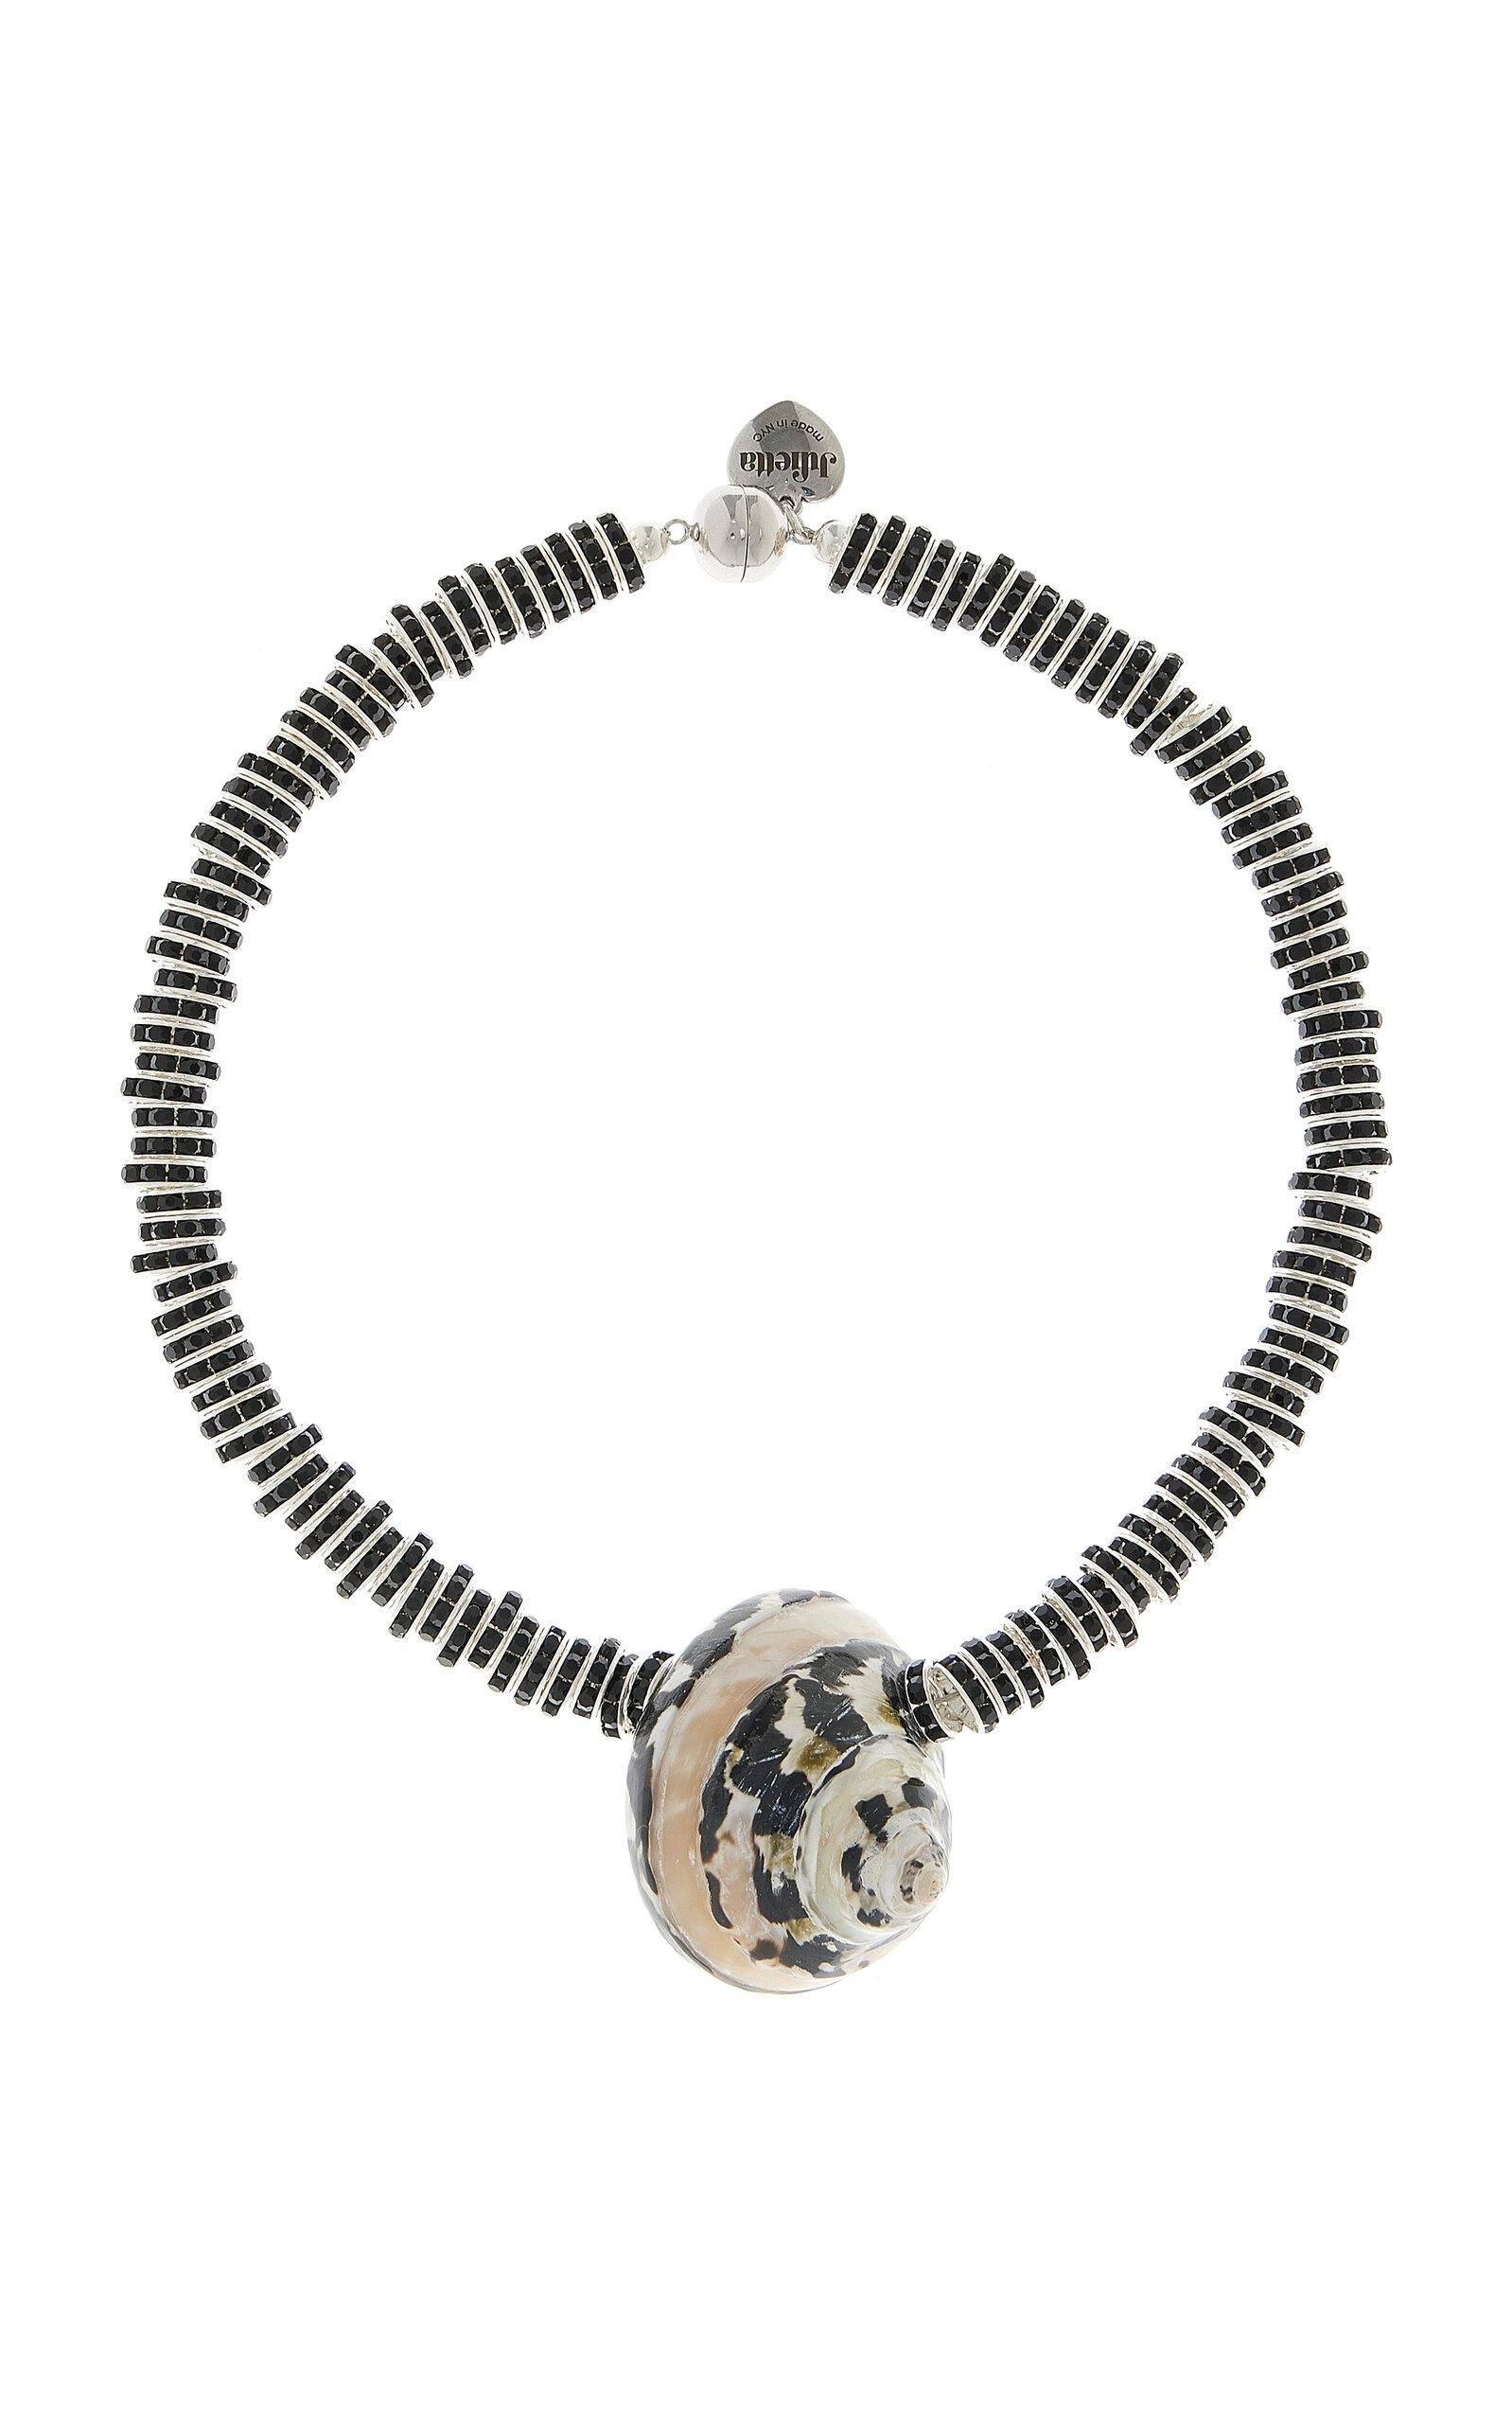 Julietta - Beaded Shell Necklace - Black - OS - Moda Operandi - Gifts For Her by JULIETTA